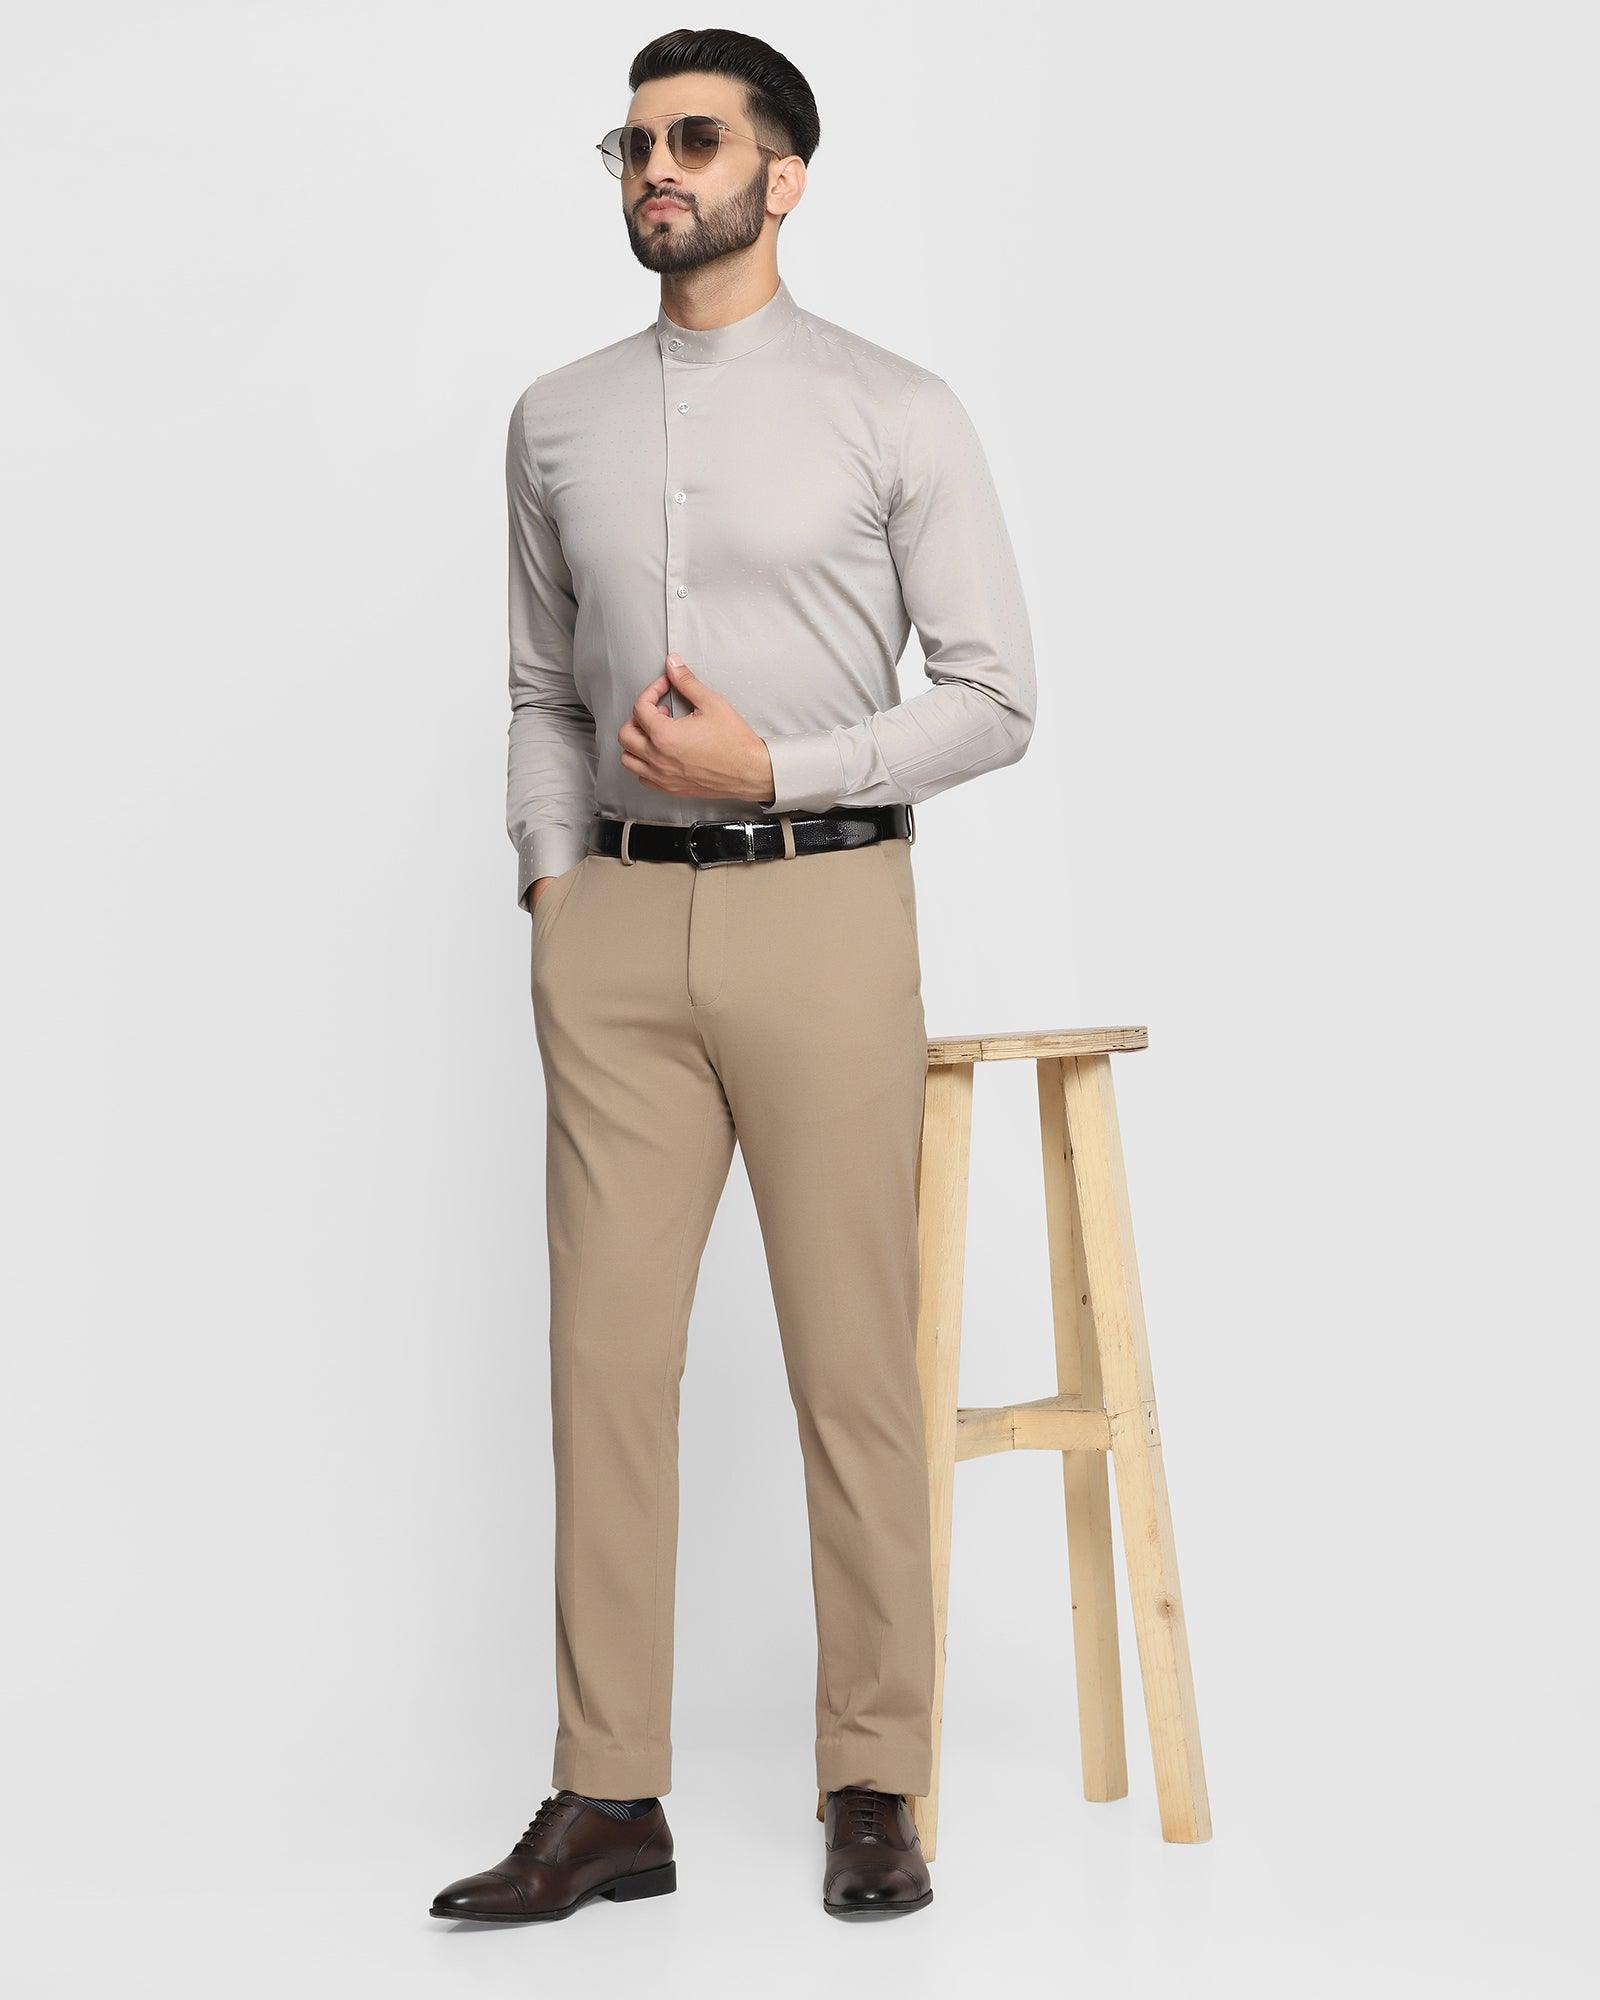 Man Grey Jacket Brown Trousers Sitting Stock Photo 613586207 | Shutterstock